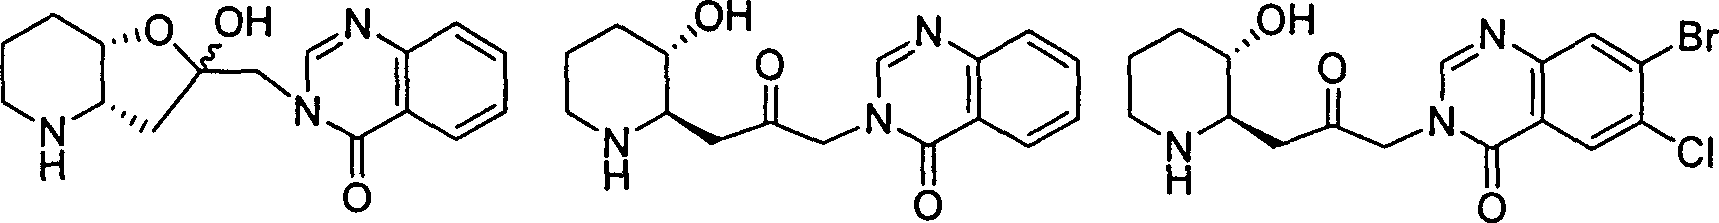 Method for synthetizing orixine and RU-19110 intermediate